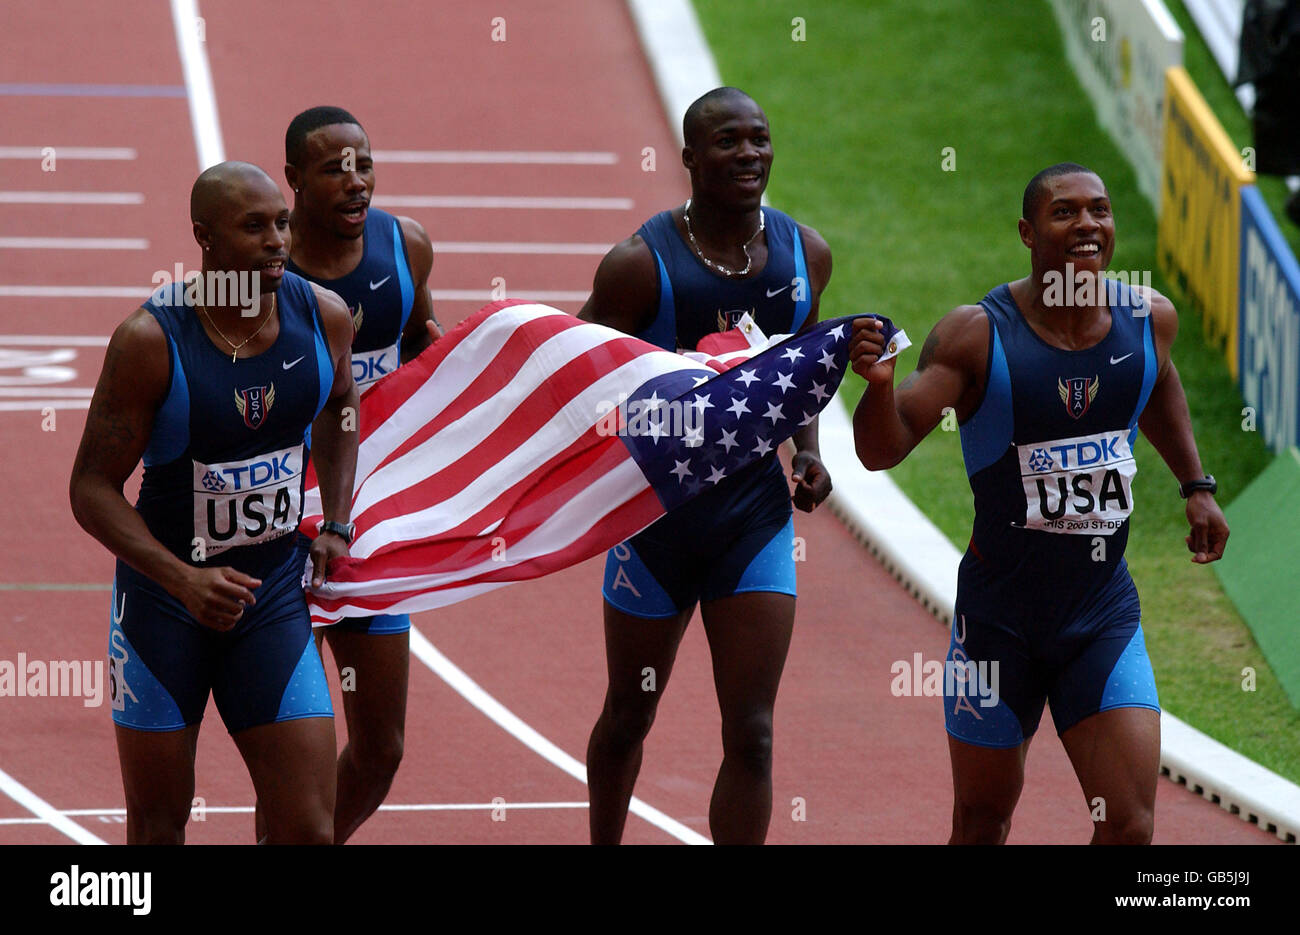 Athletics - IAAF World Athletics Championships - Paris 2003 - Men's 4x100m Relay Final. USA's 4x100m relay team celebrates winning the final Stock Photo